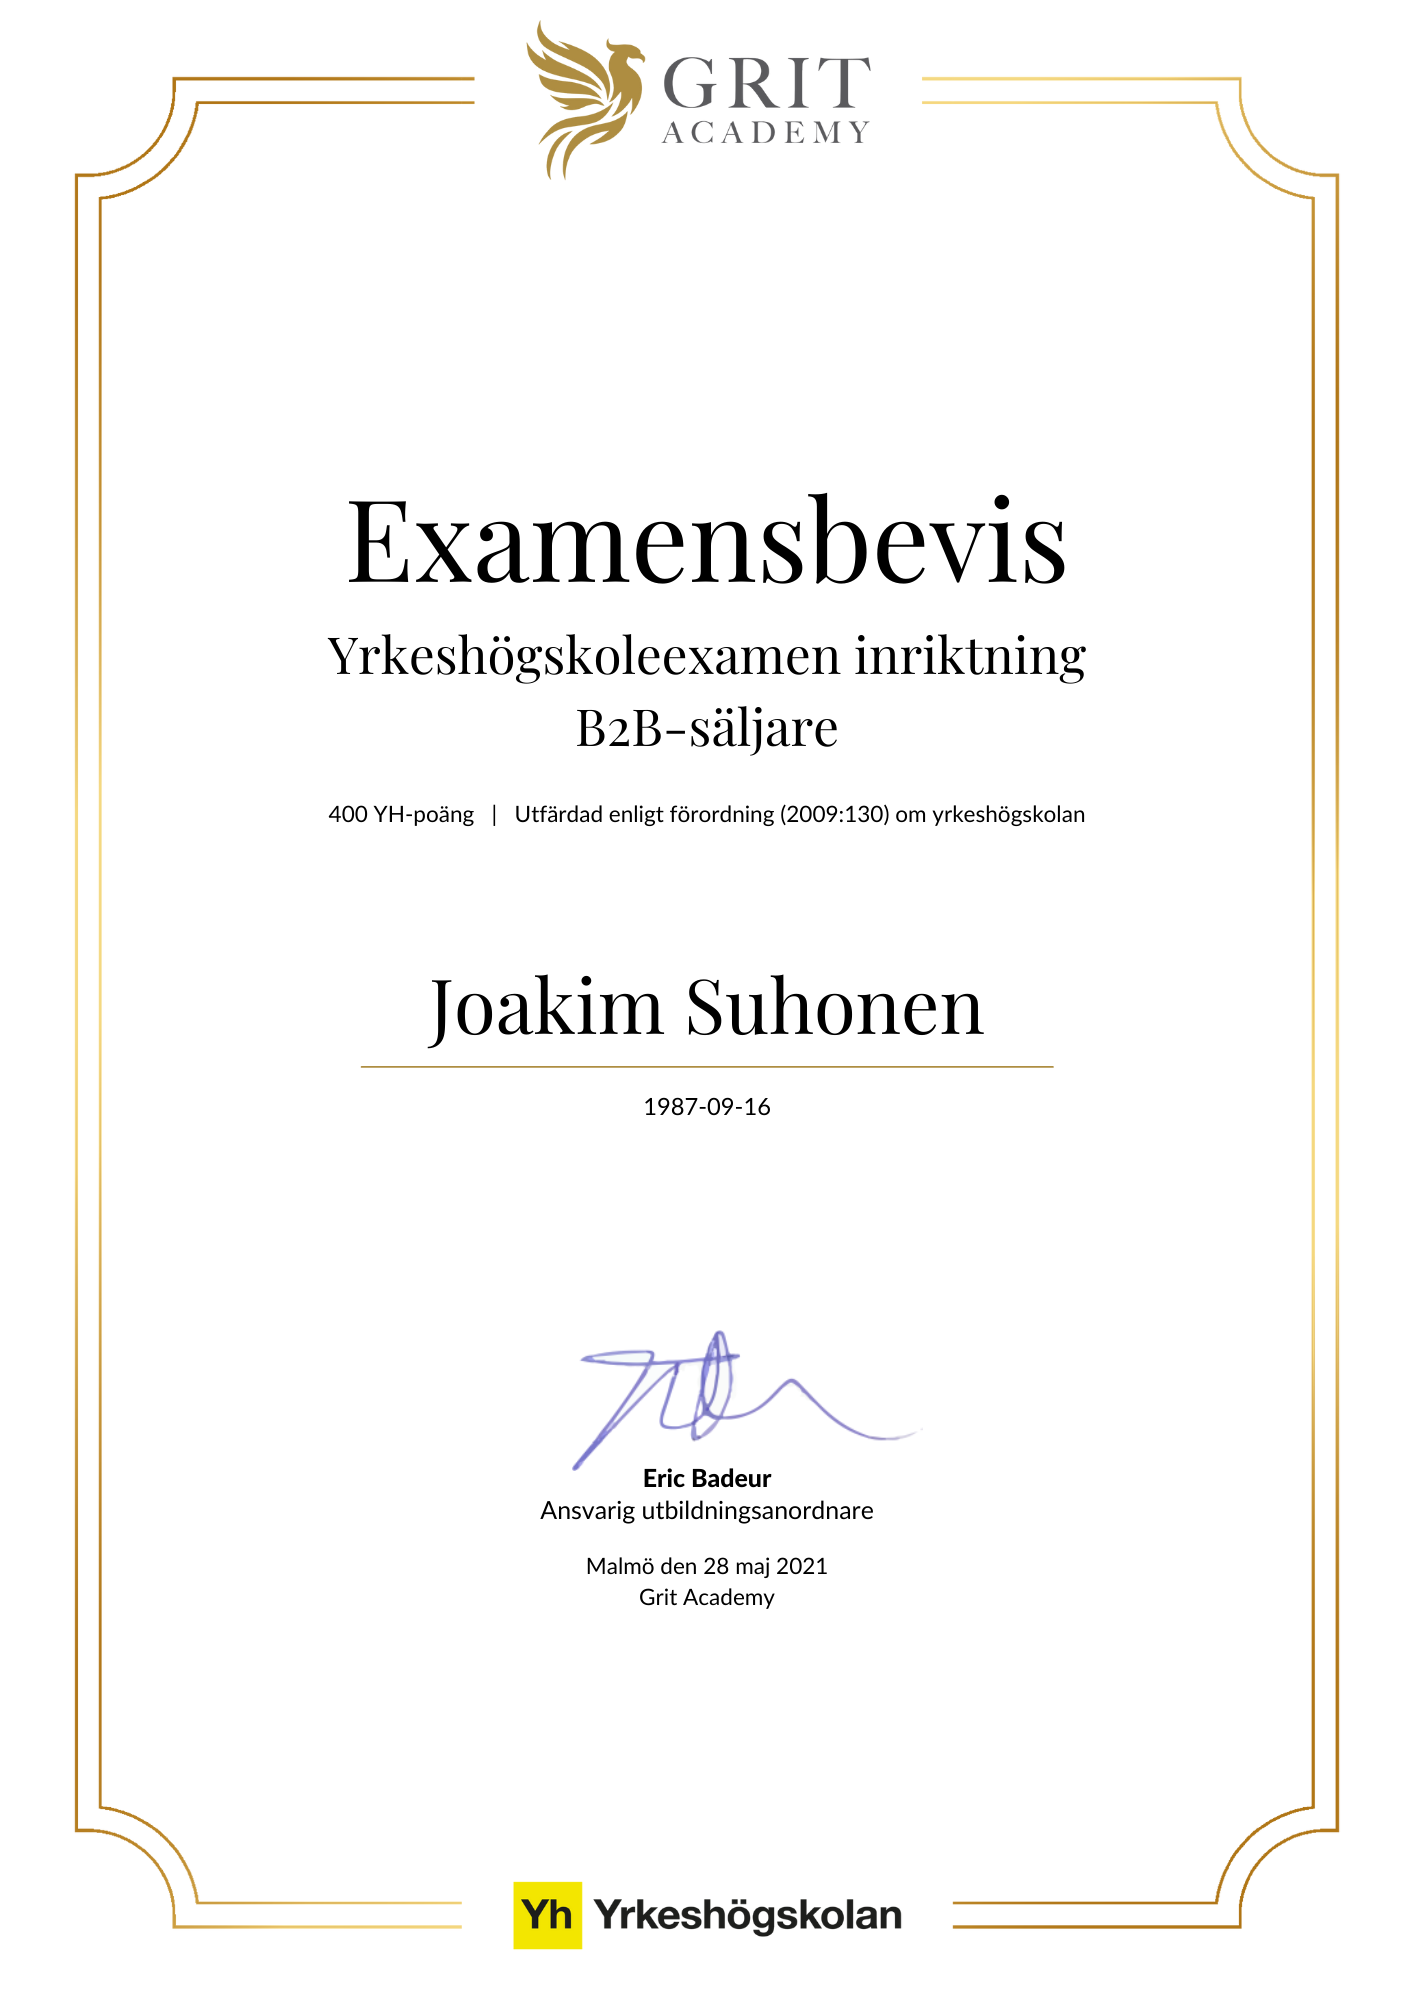 Examensbevis Joakim Suhonen - 1